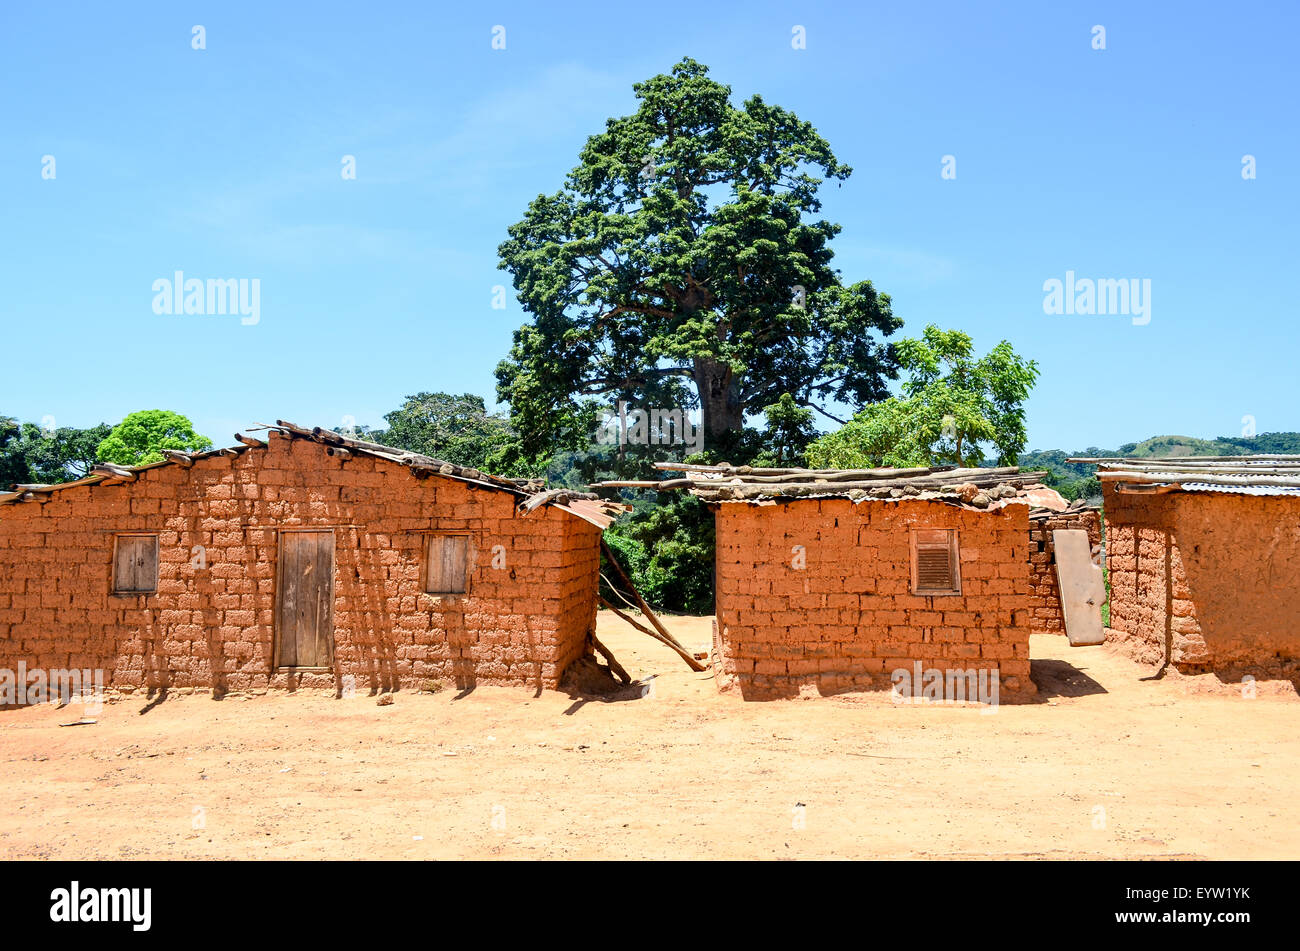 Houses made of mud bricks in Angola Stock Photo